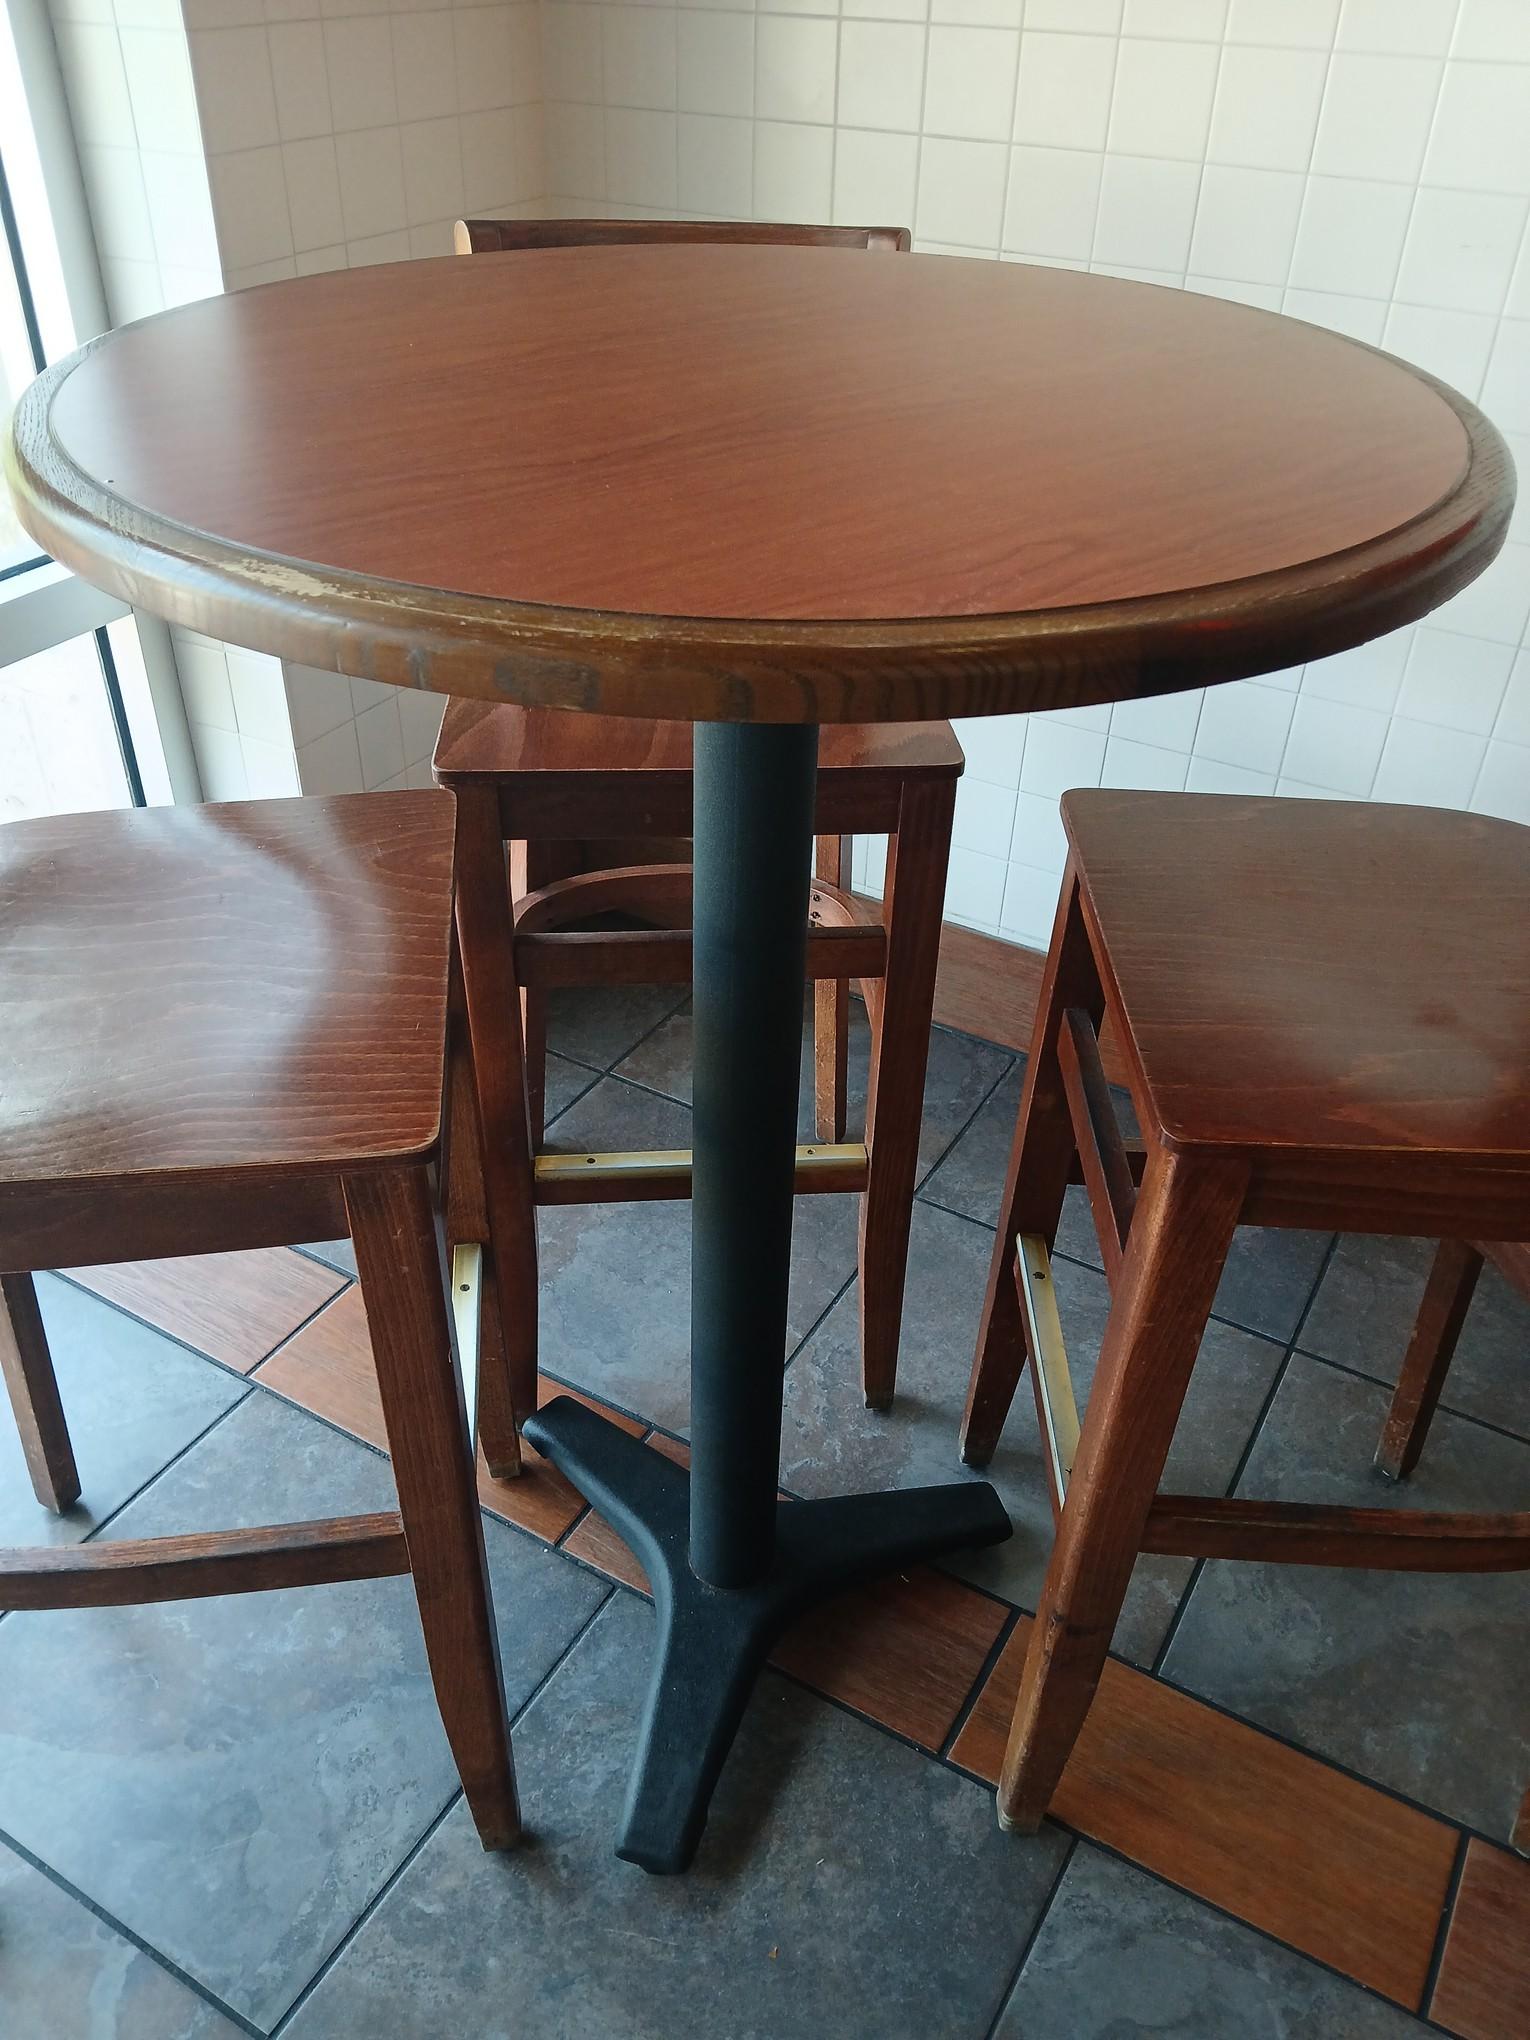 Bar Height Table & Bar Stool Set / Light Wood 5 Pc Table & Bar Stools